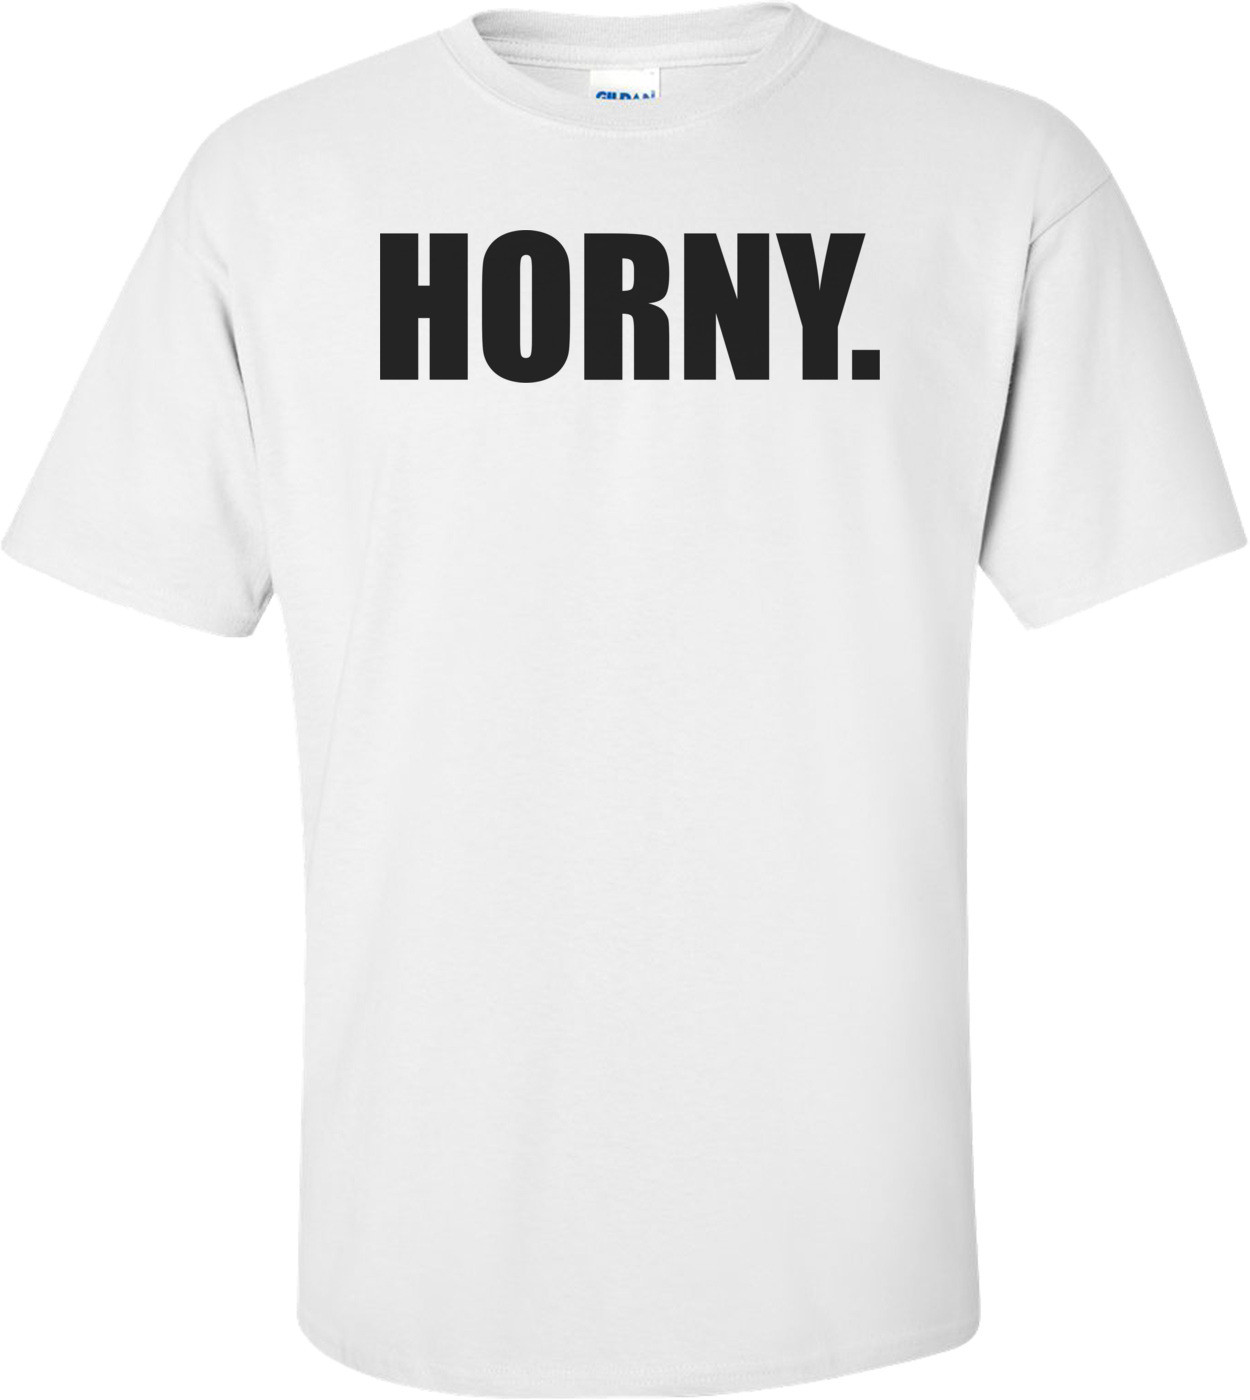 HORNY. Shirt